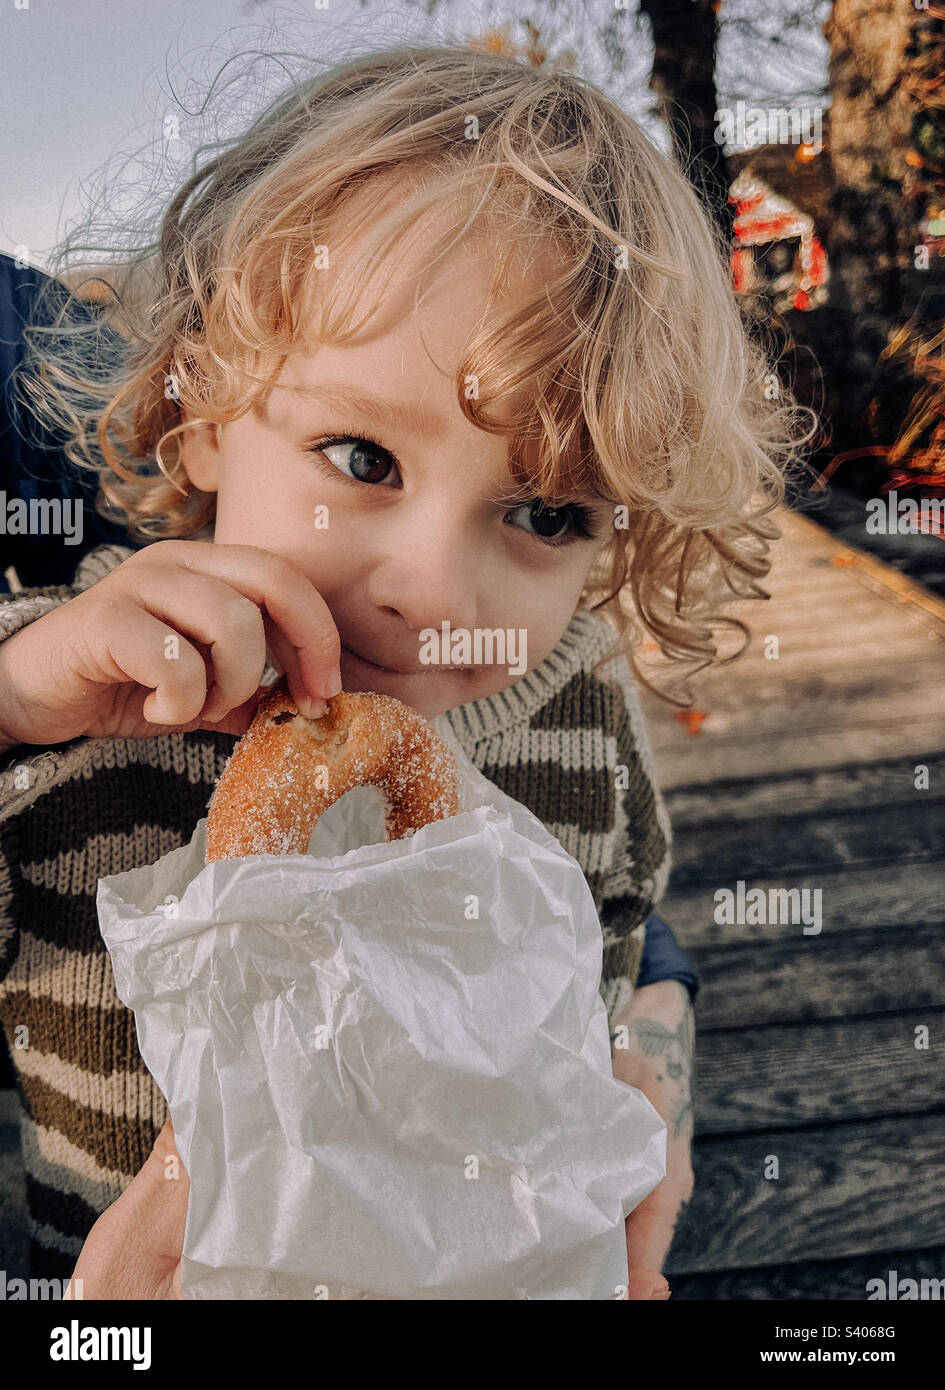 Toddler eating doughnut cute Stock Photo